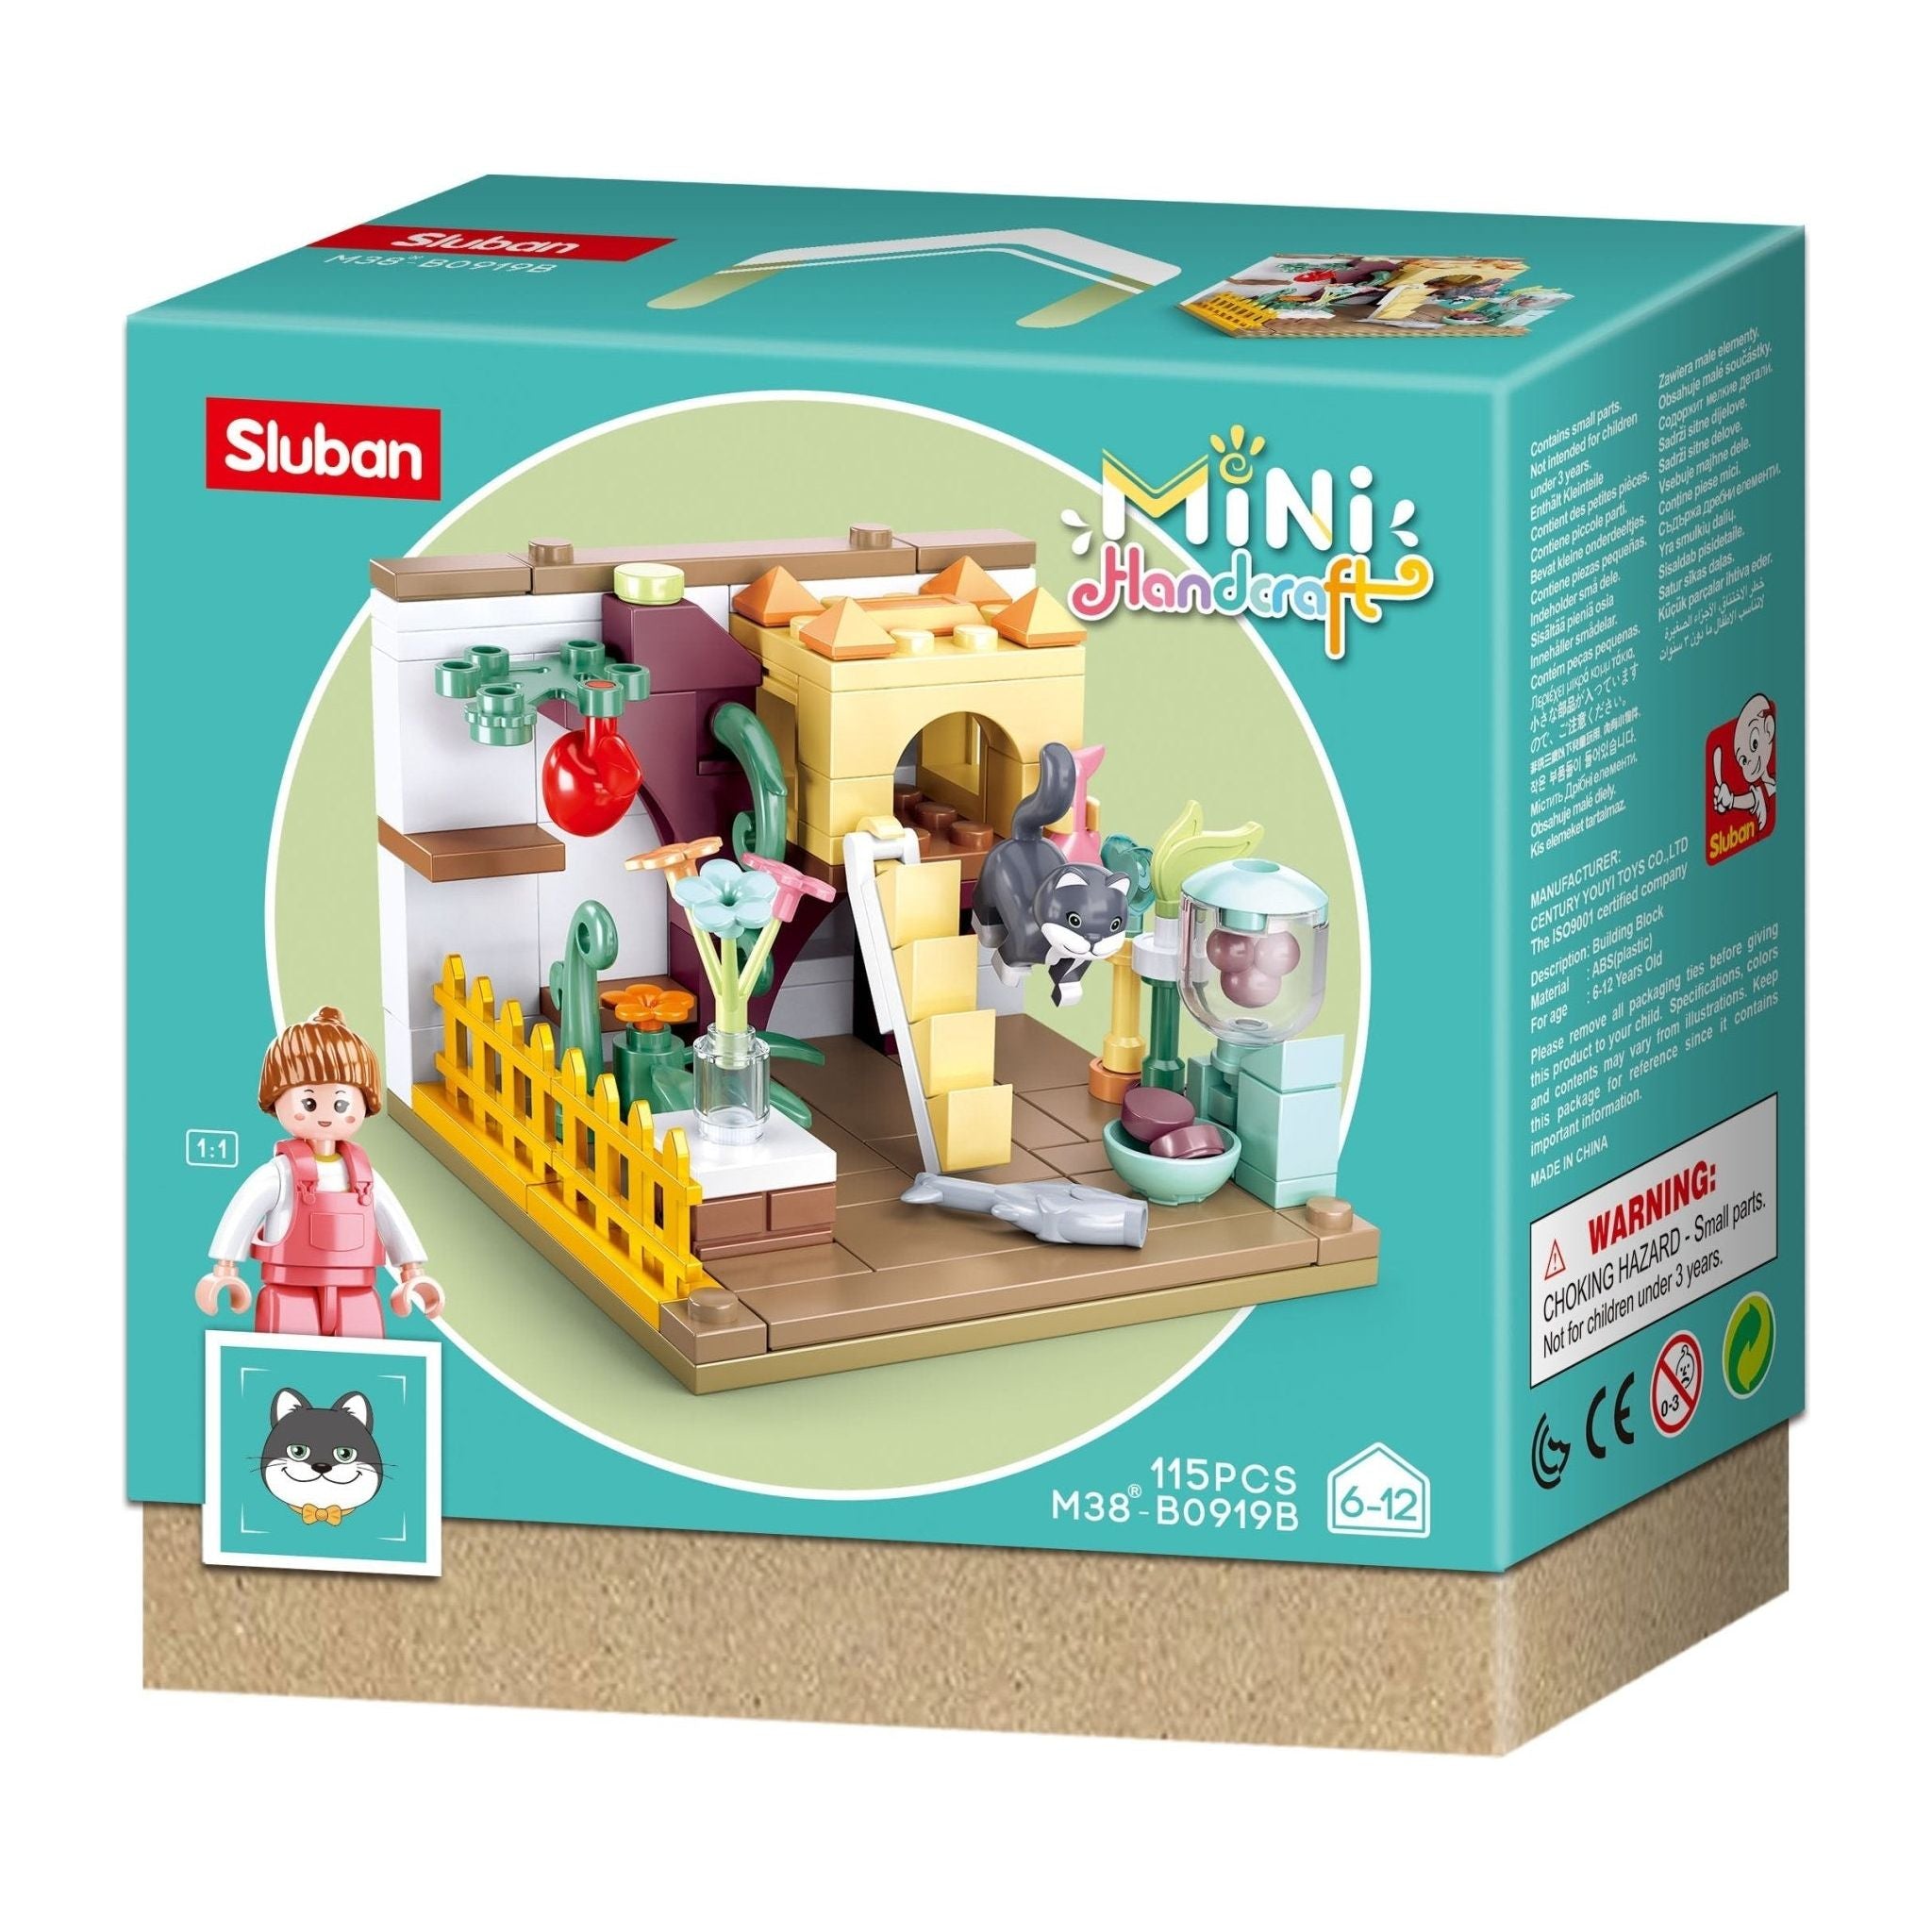 Sluban Mini Handcraft - Pets (Assorted) - Toybox Tales